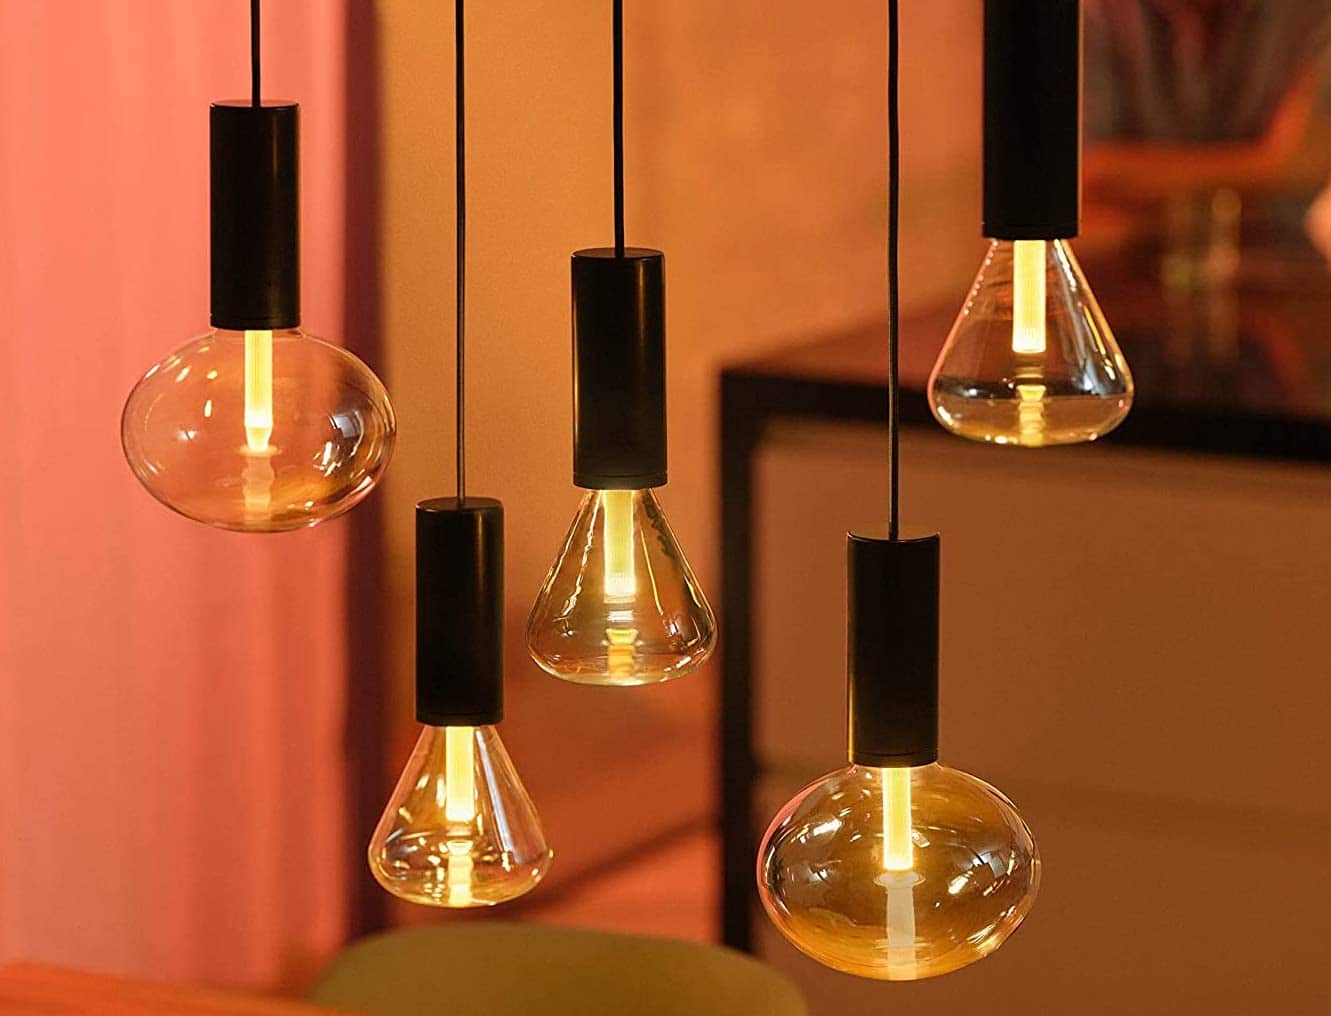 Hueblog: Philips Hue Lightguide: So schick waren noch keine Smart Home Lampen